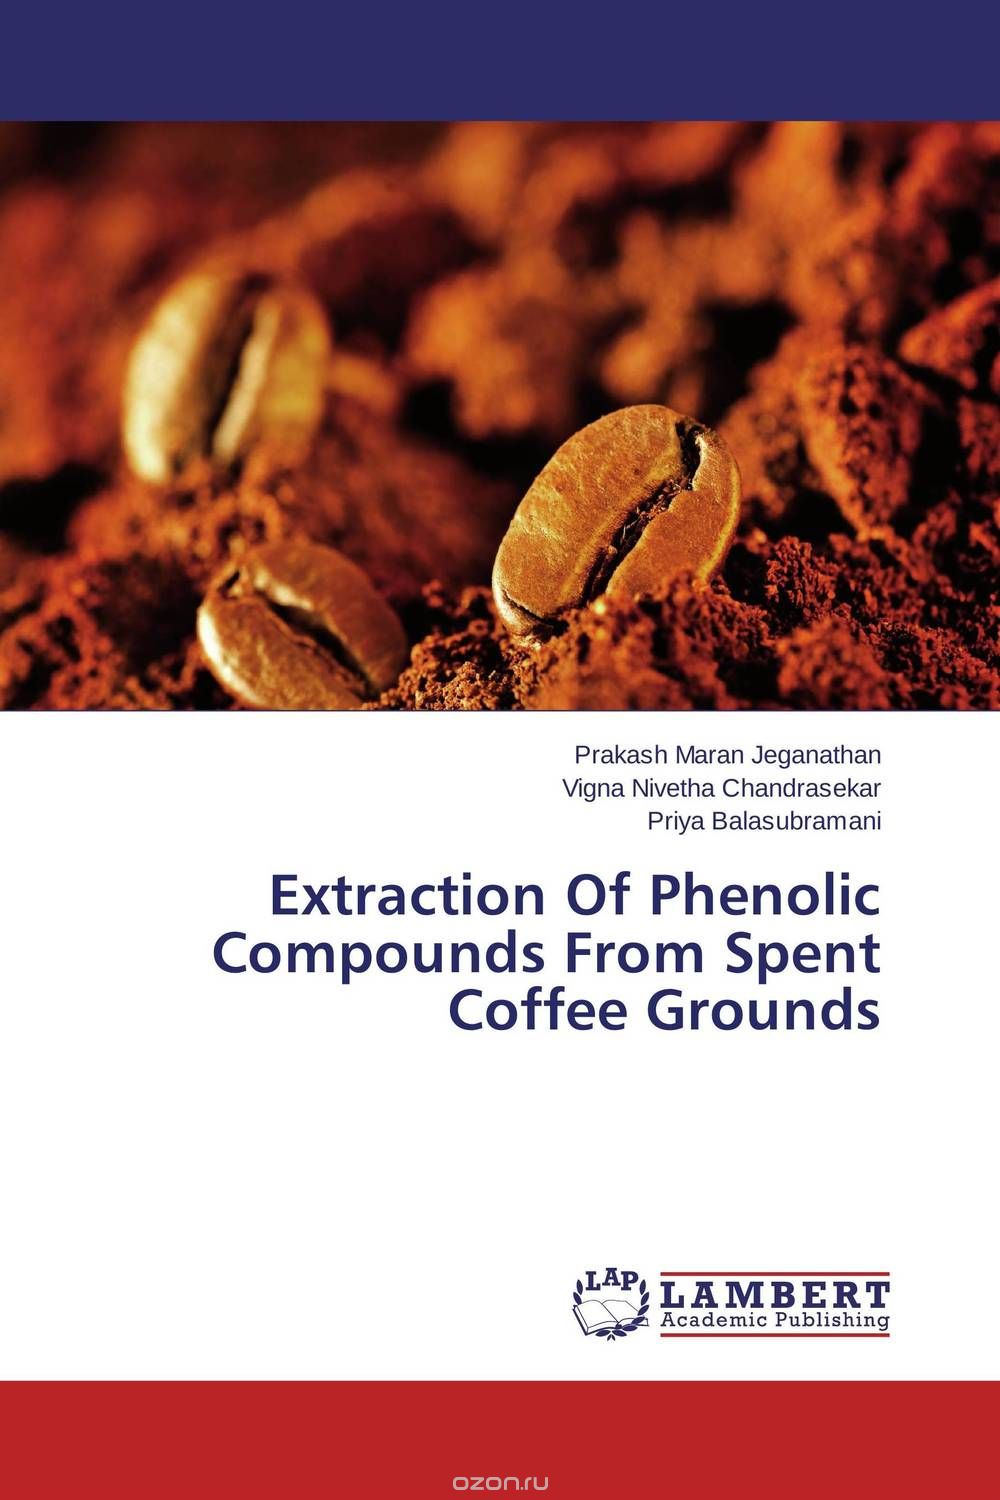 Скачать книгу "Extraction Of Phenolic Compounds From Spent Coffee Grounds"